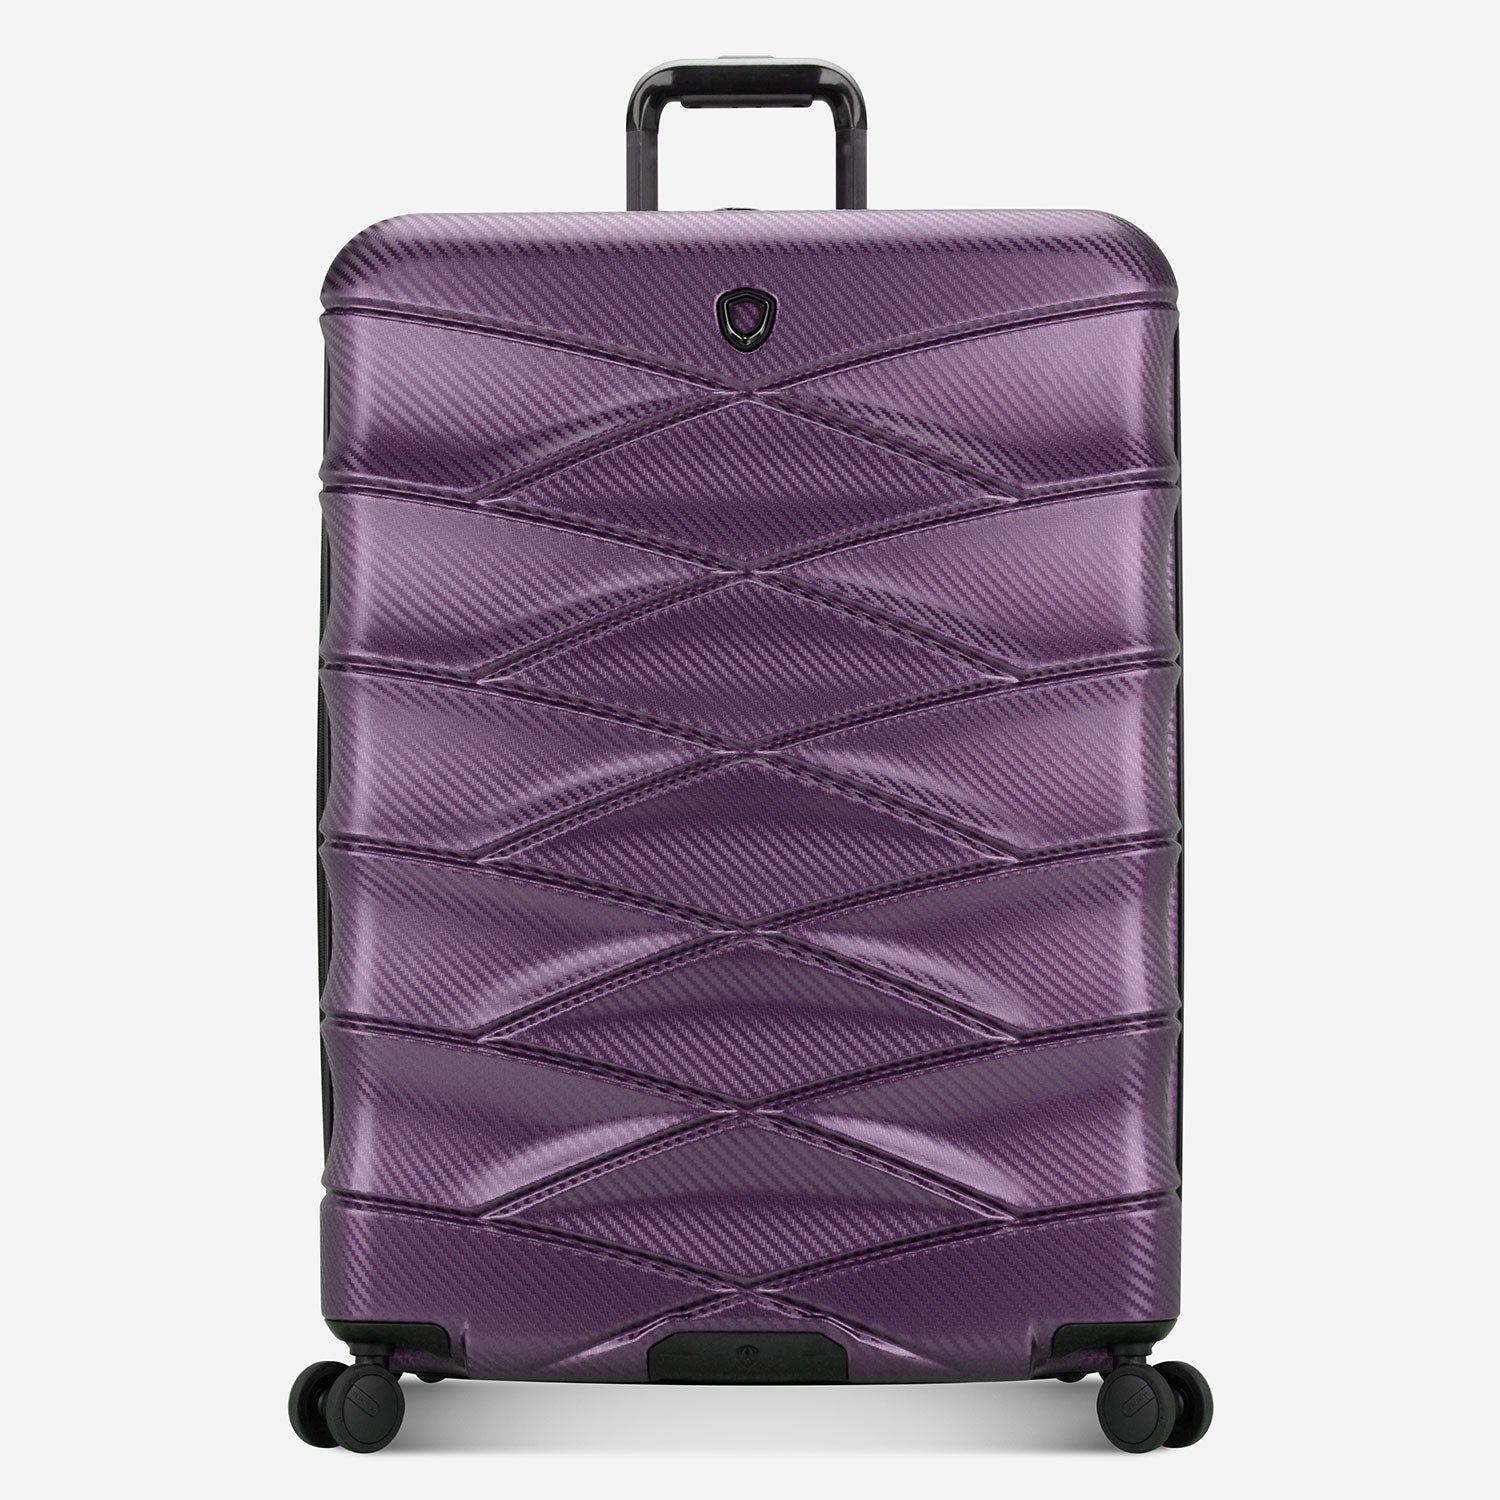 Large purple luggage